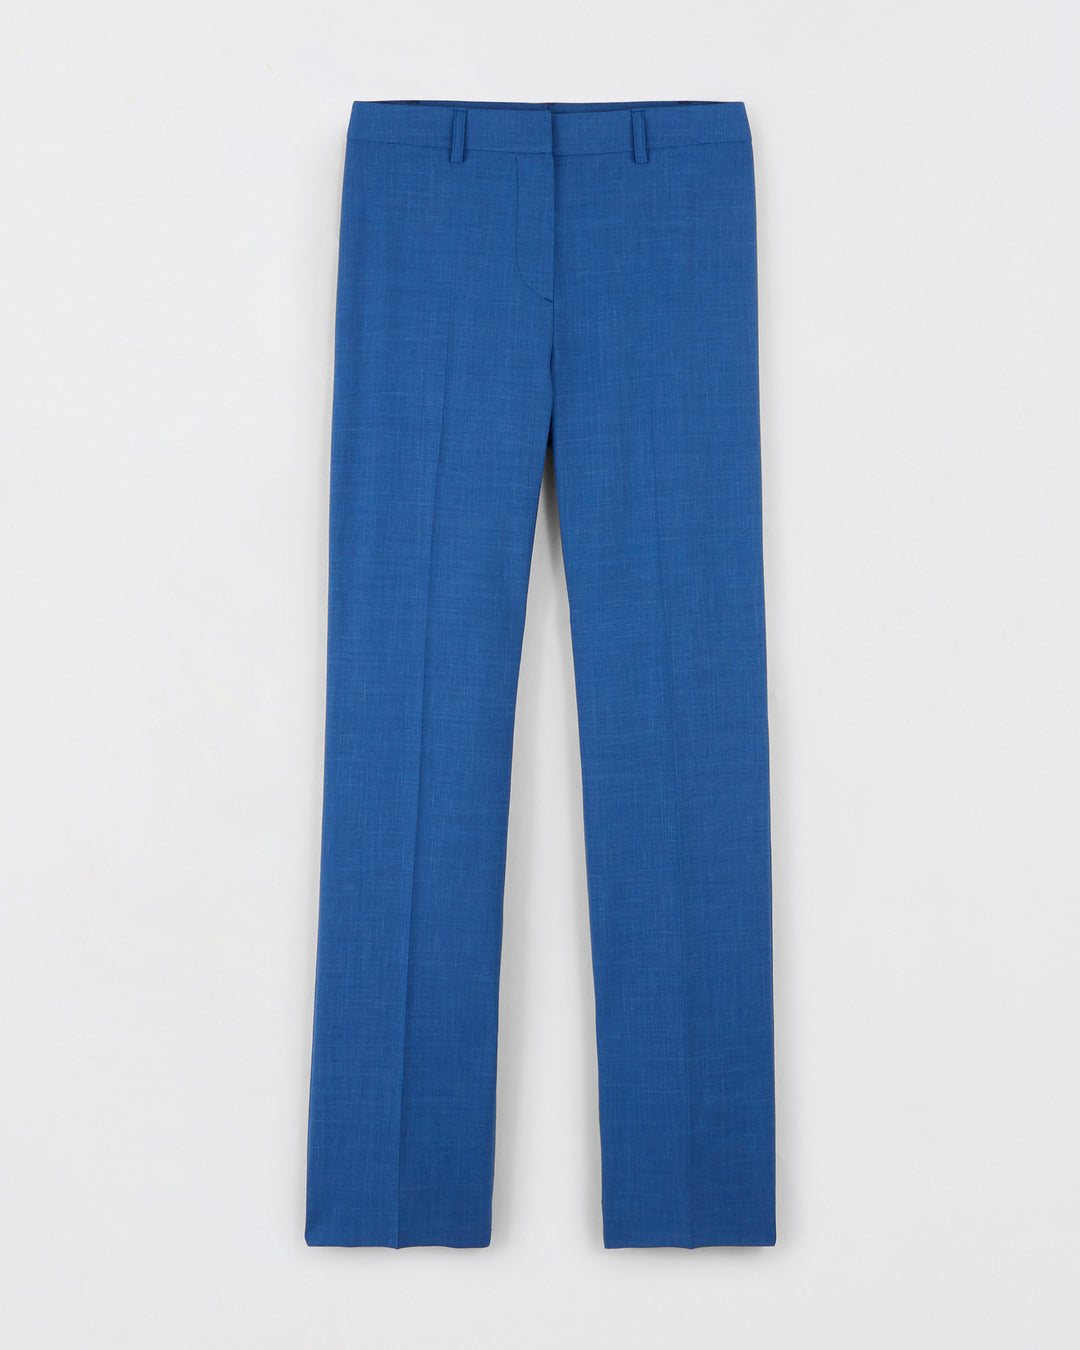 Berlin tailored pants - Azure blue